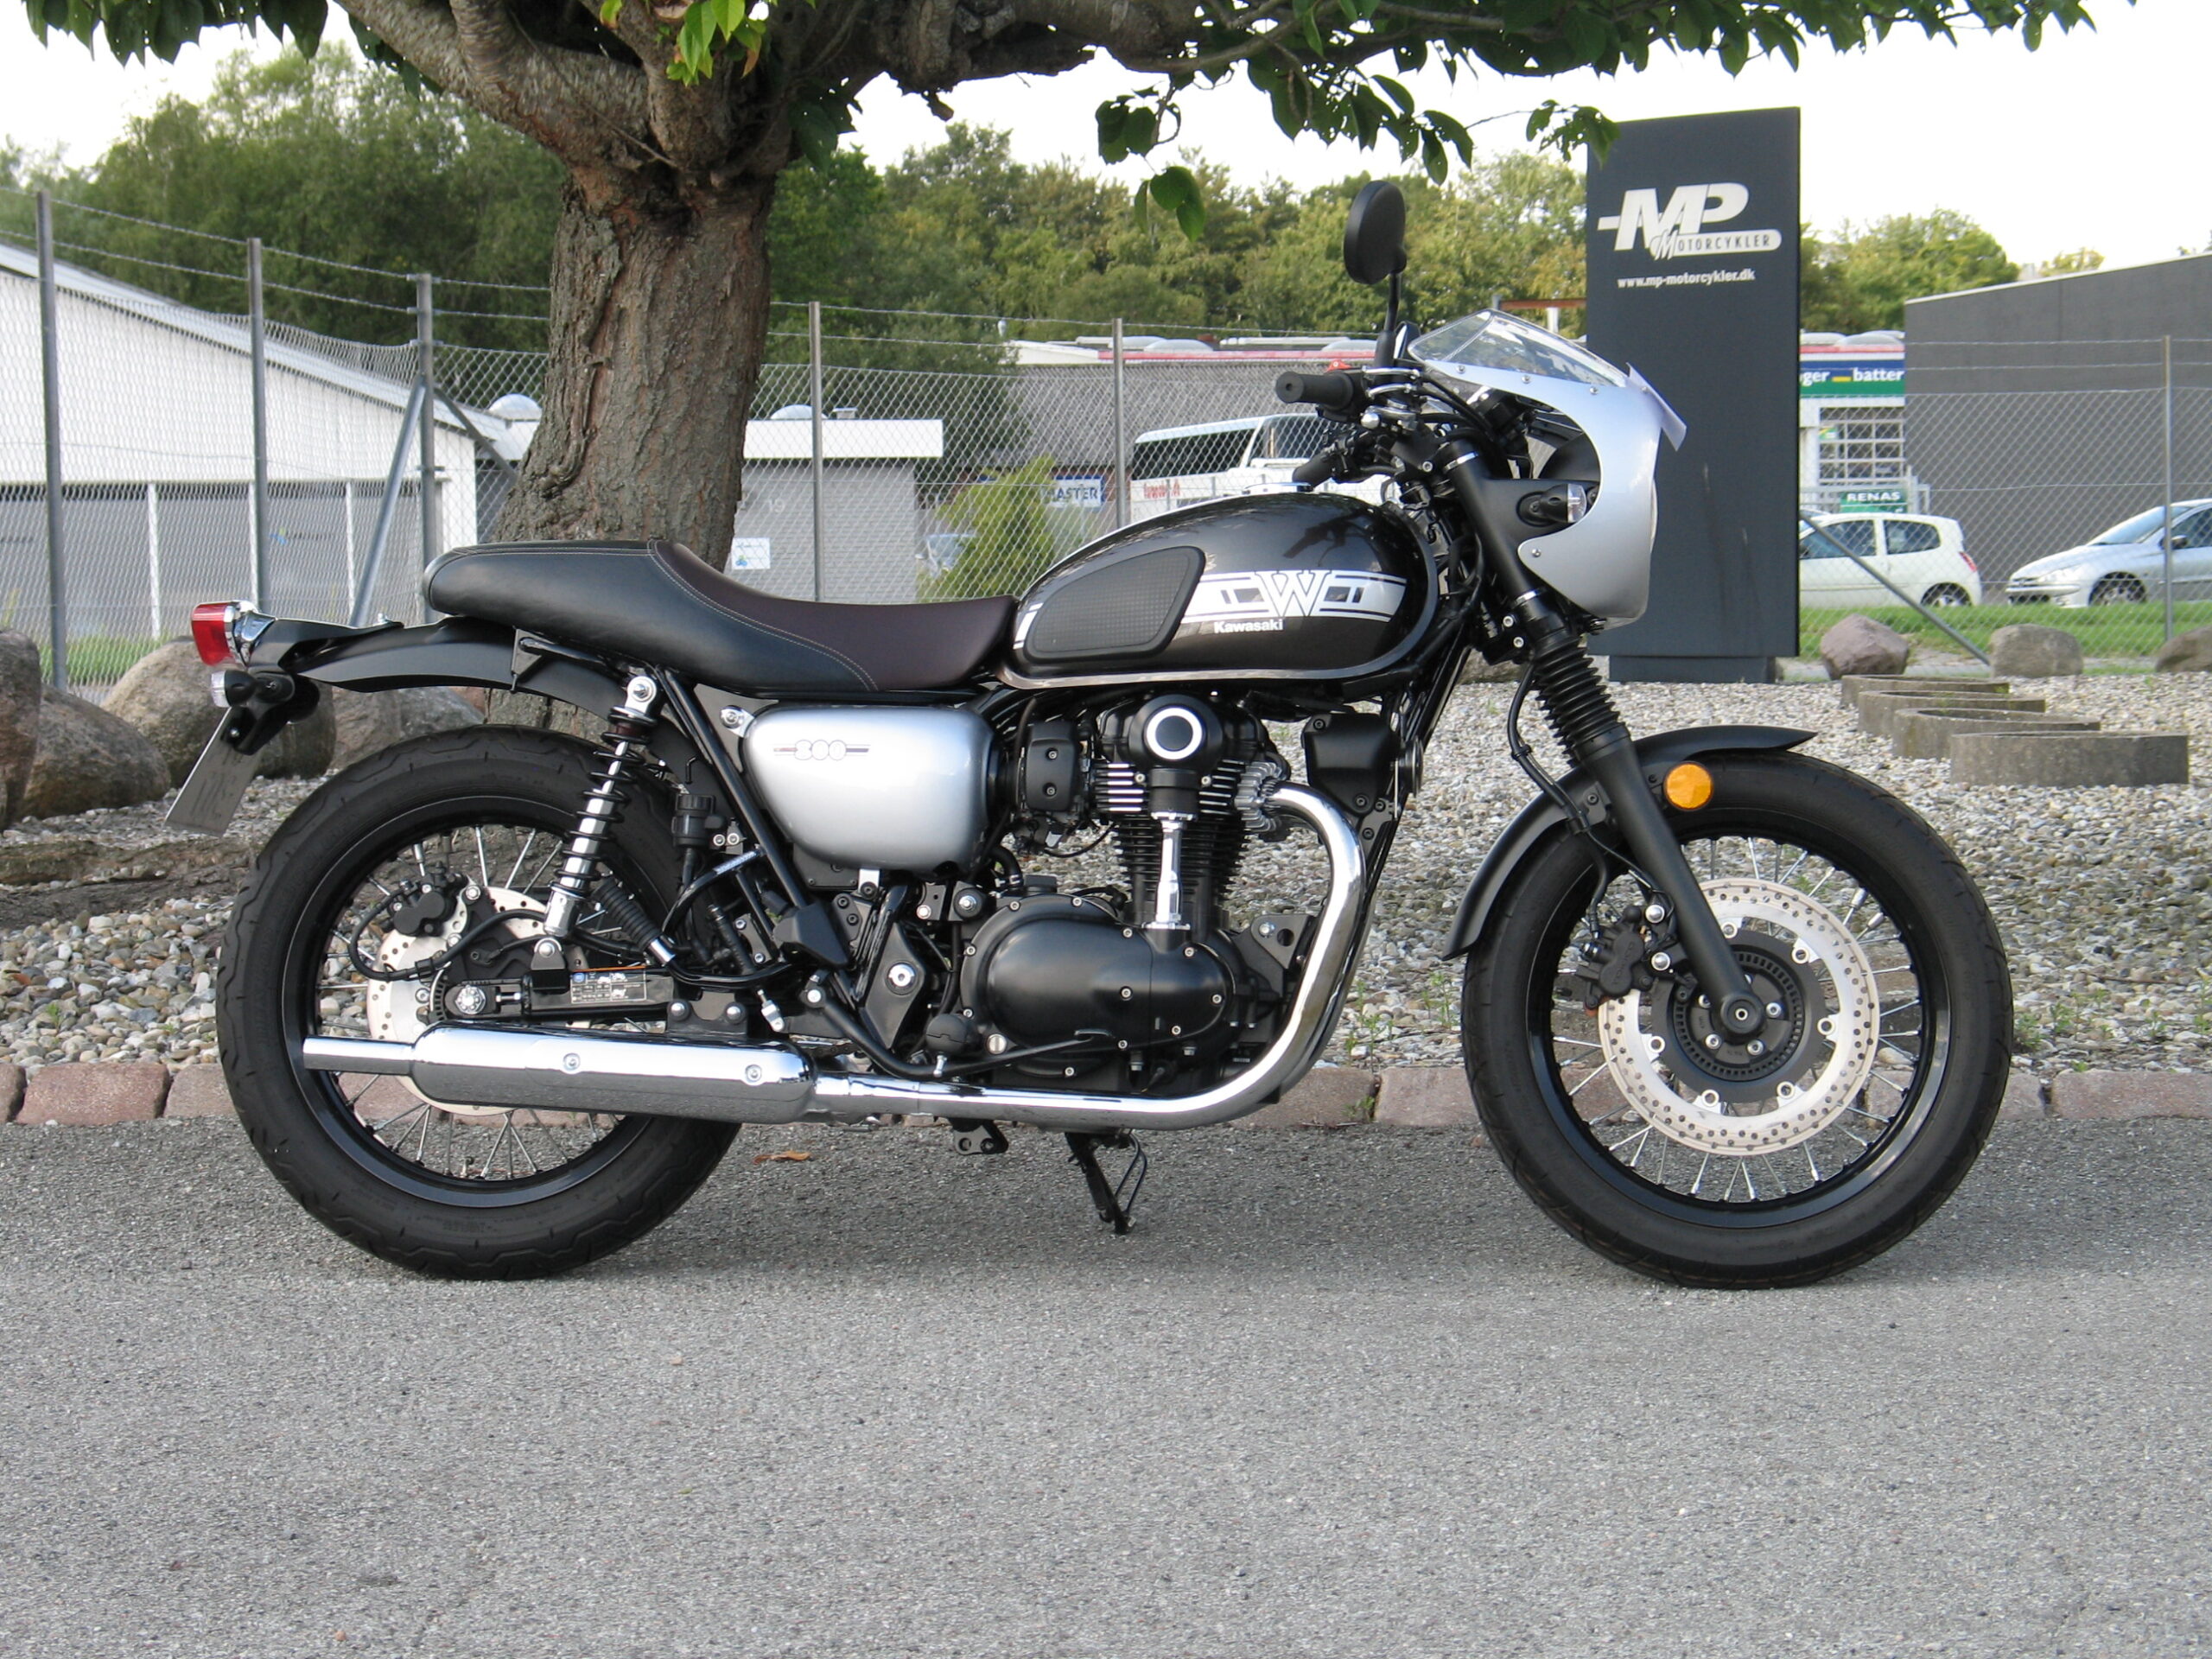 945 Peer katastrofale Kawasaki W800 – MP Motorcykler